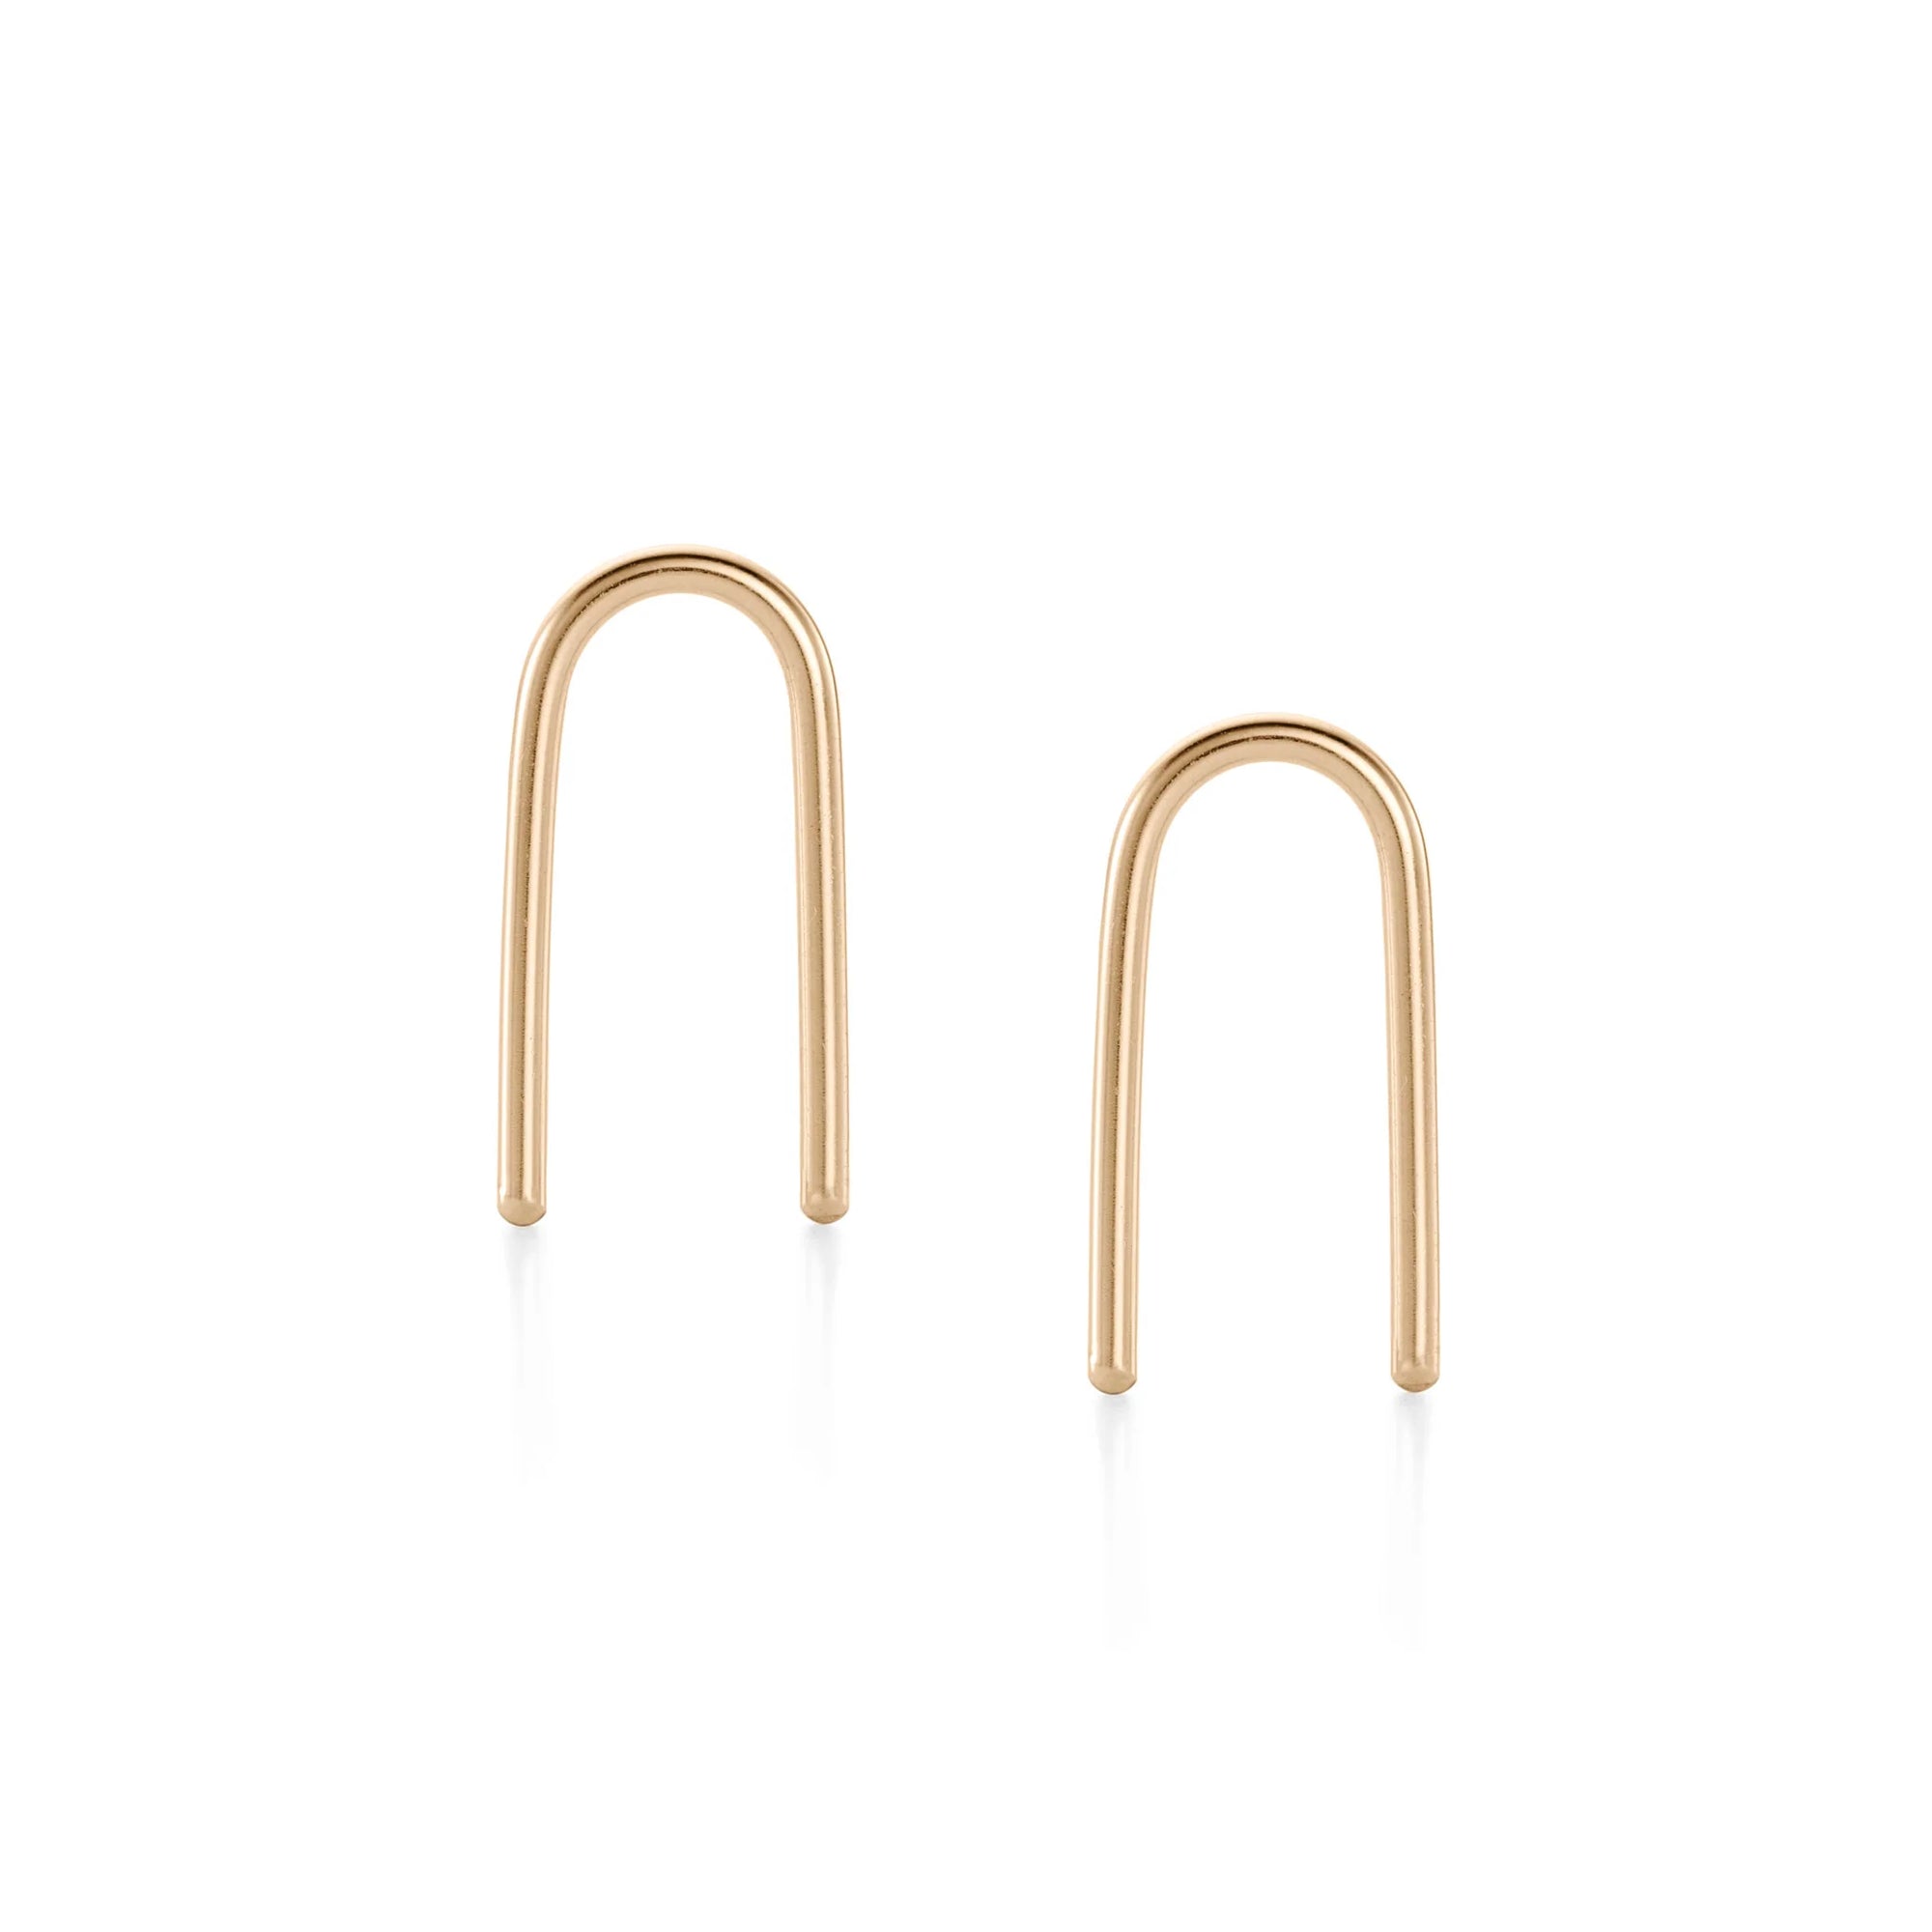 U-Shaped Gold Earrings by Baleen